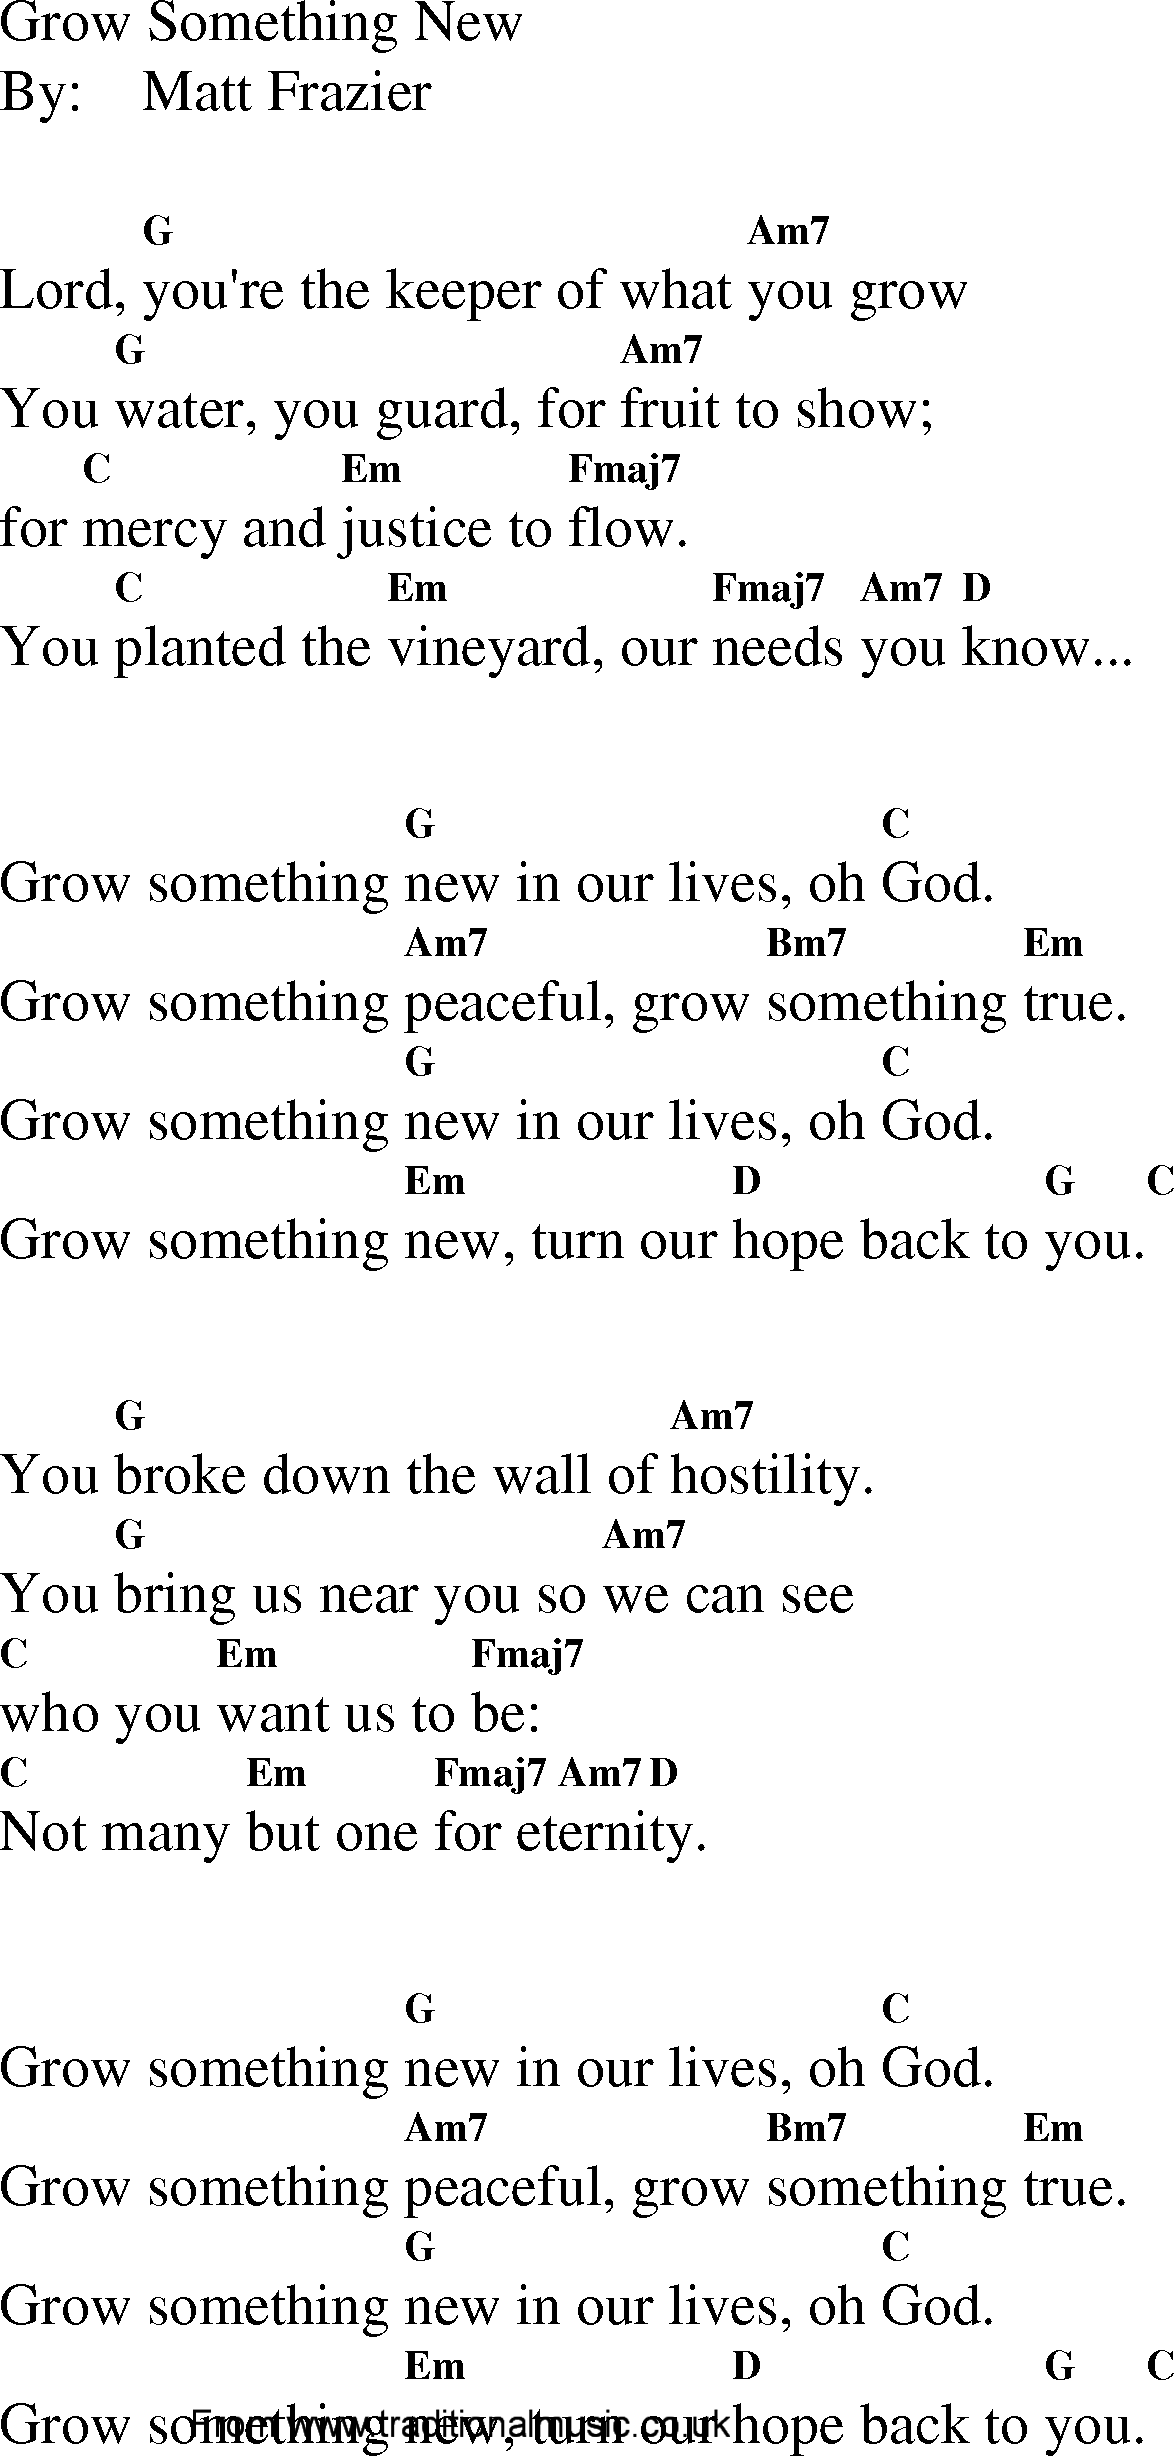 Gospel Song: grow_something_new, lyrics and chords.